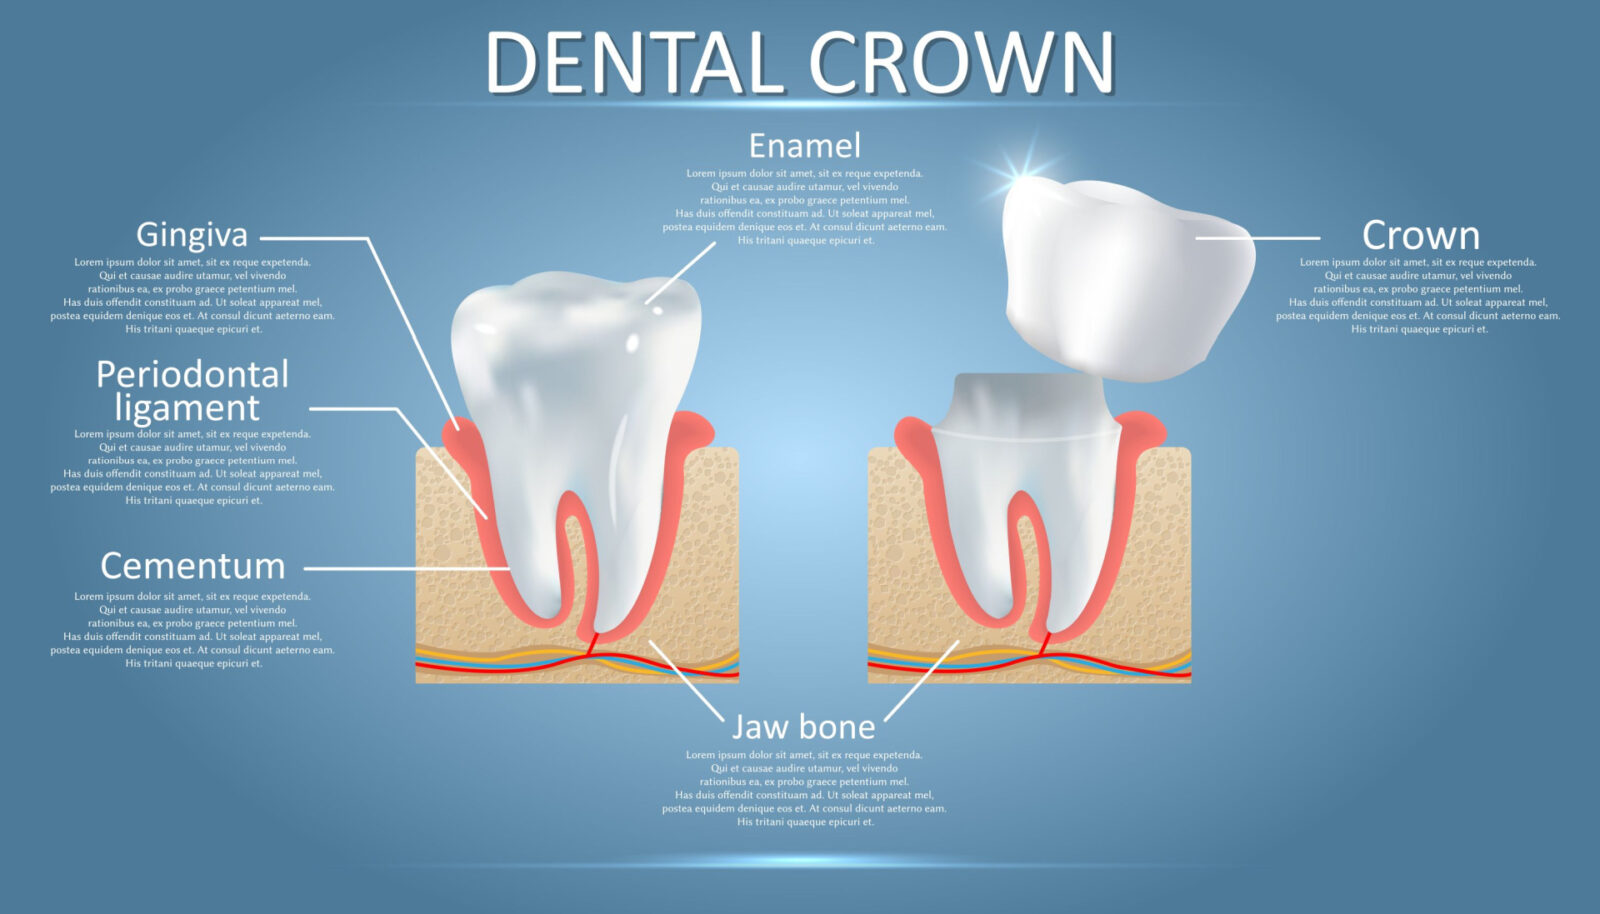 A diagram of what Dental Crowns look like